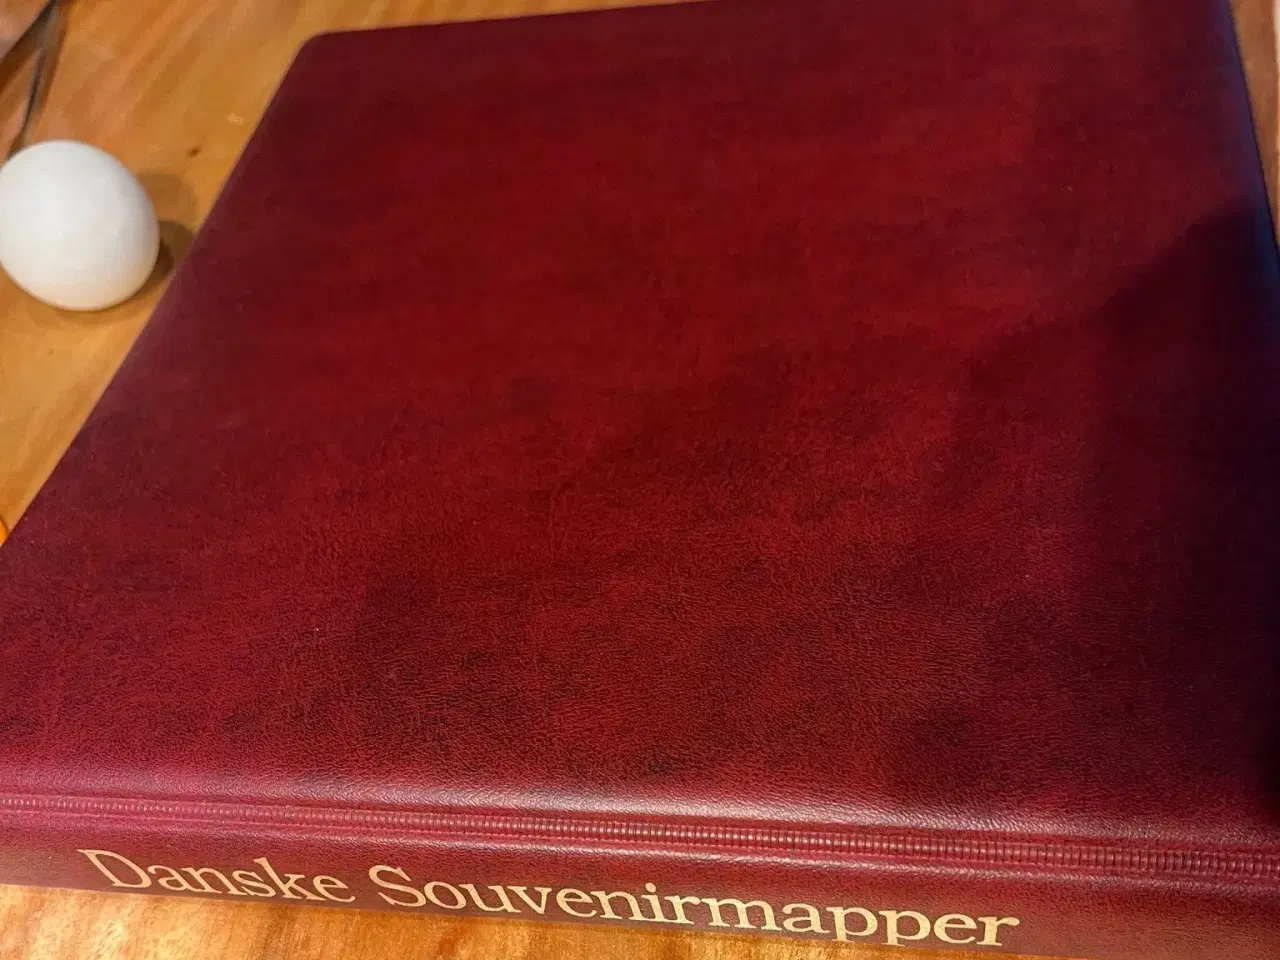 Billede 1 - Mappe til Danske souvenirmapper